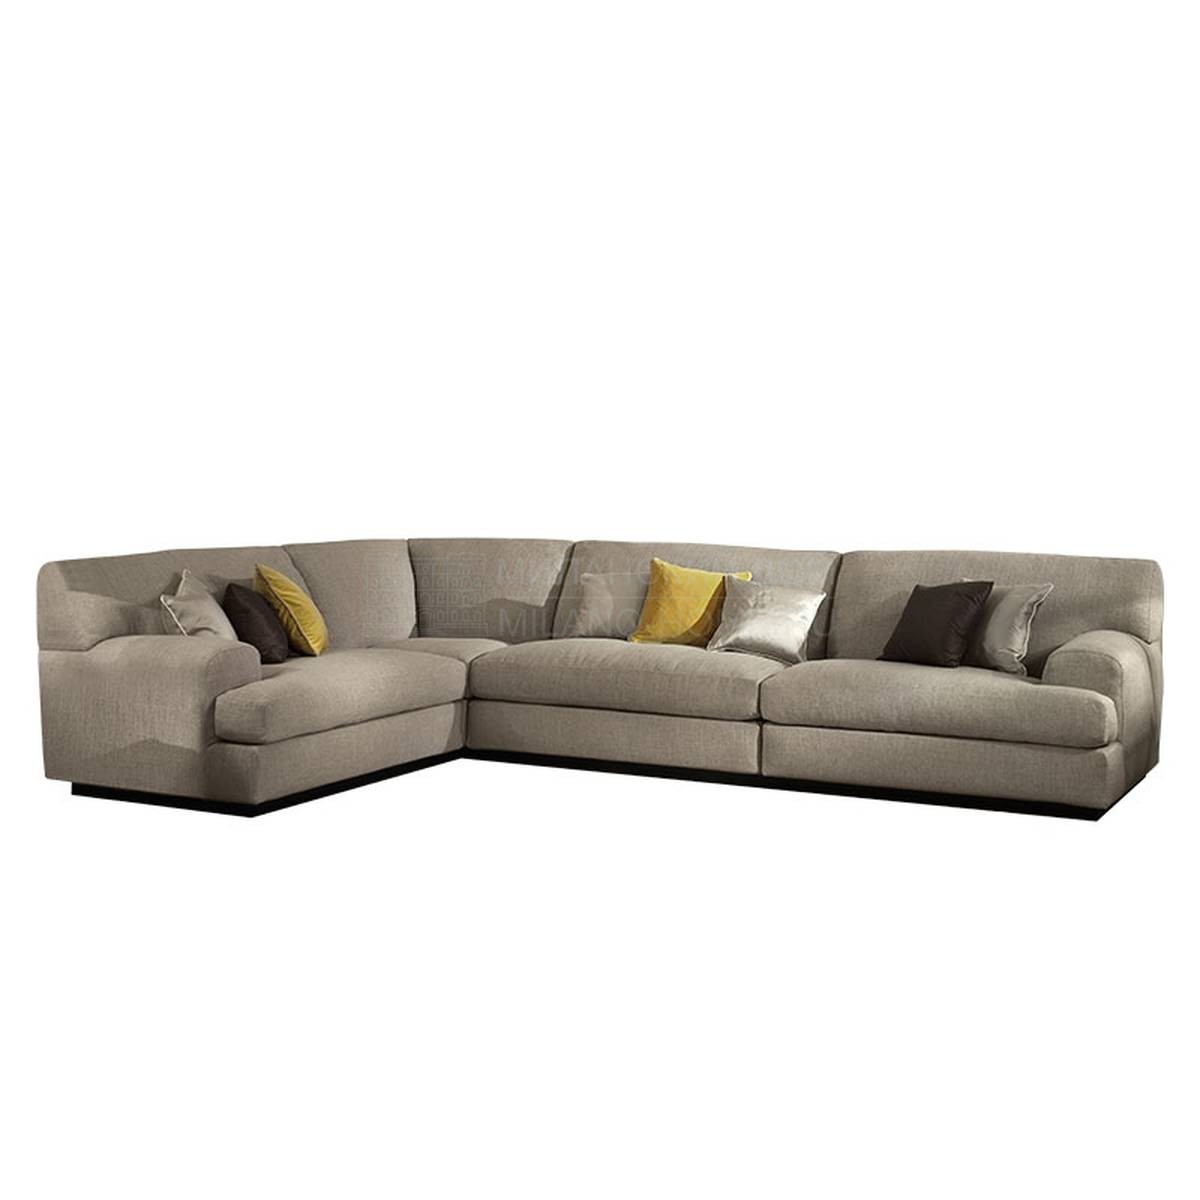 Модульный диван Vico 2/ sofa из Италии фабрики SOFTHOUSE